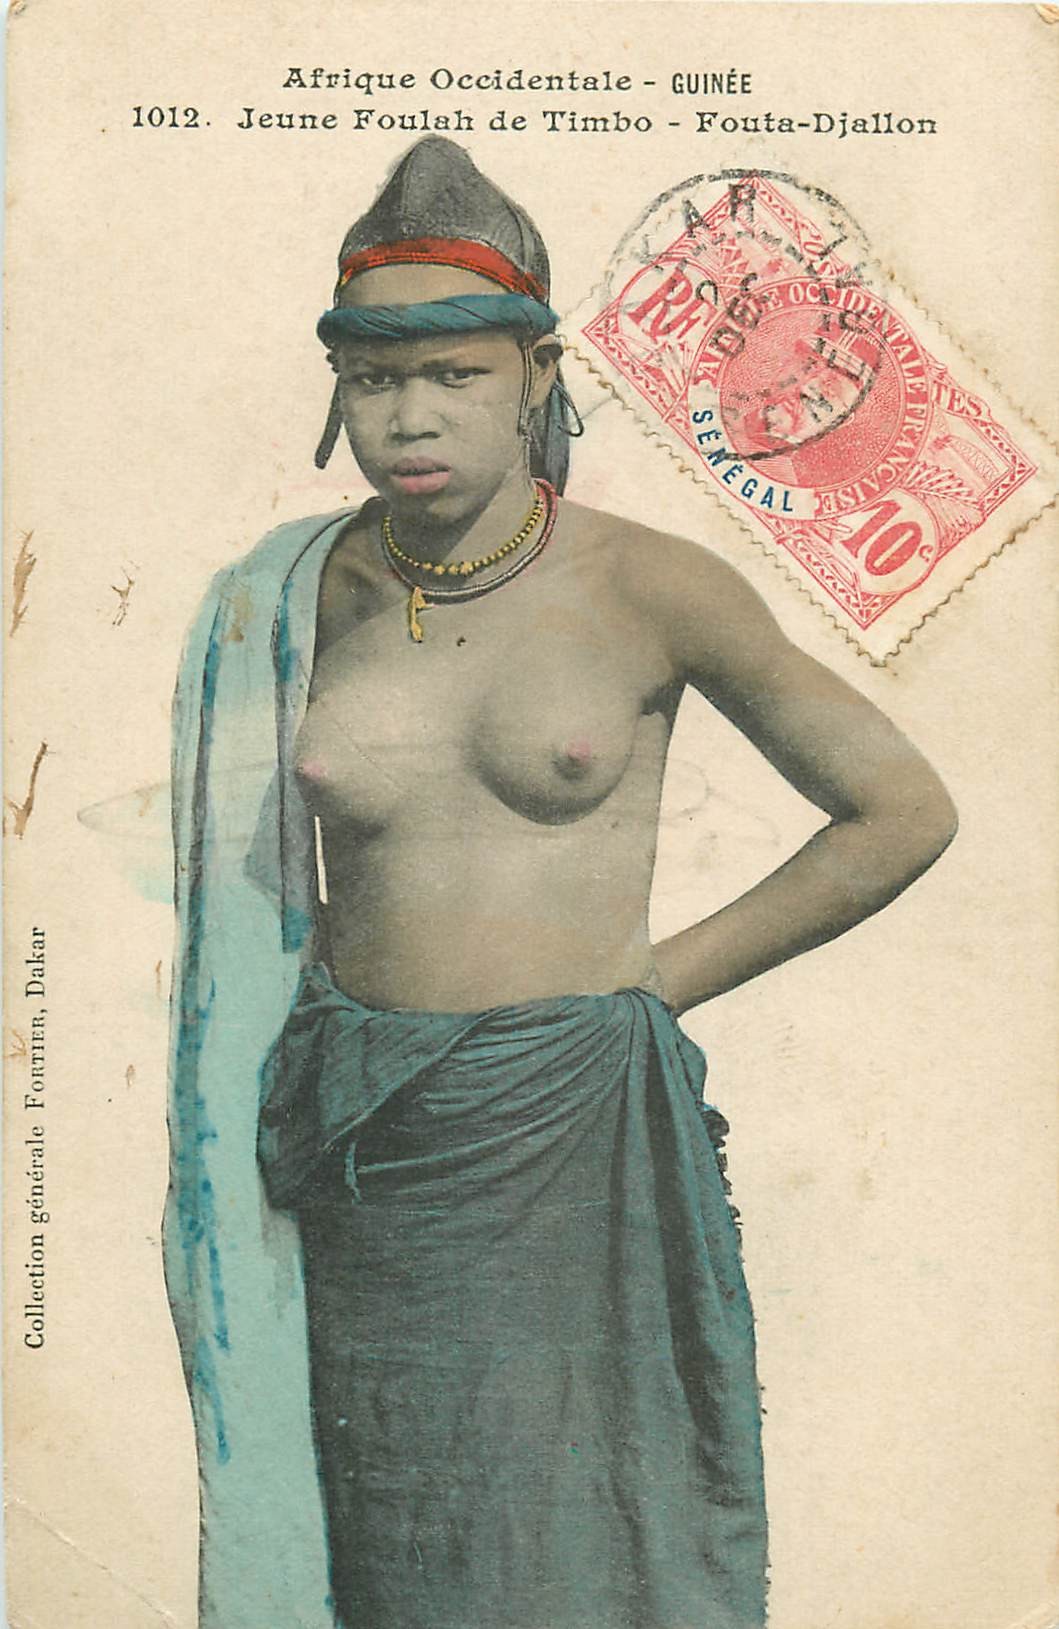 GUINEE. Jeune Foulah de Timbo Fouta-Djallon aux seins nus